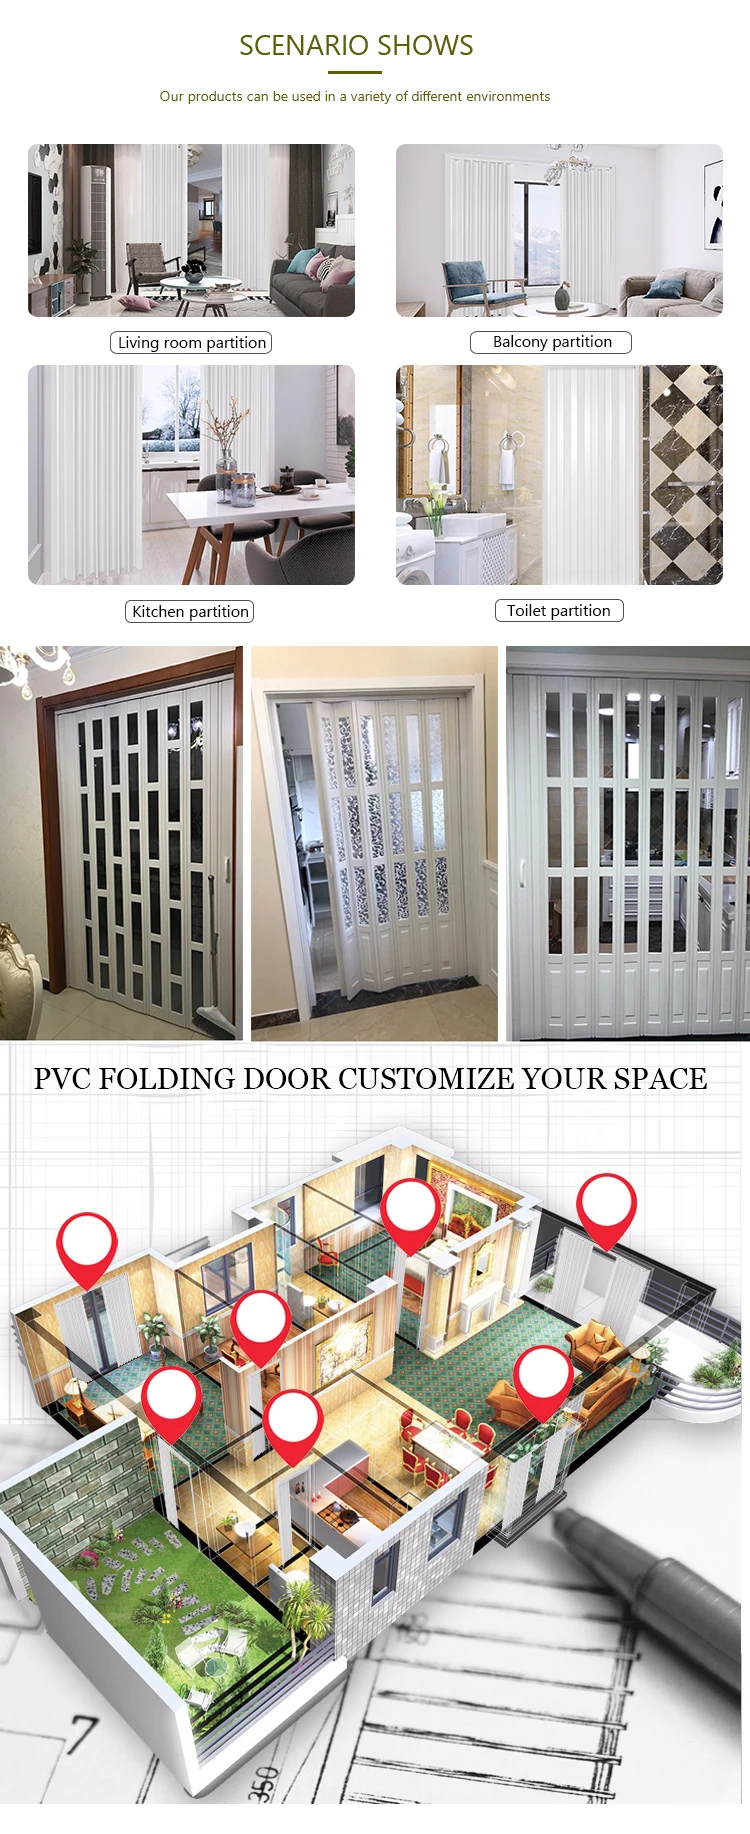 Up-to-date styling bathroom folding door price plastic pvc sliding doors prices